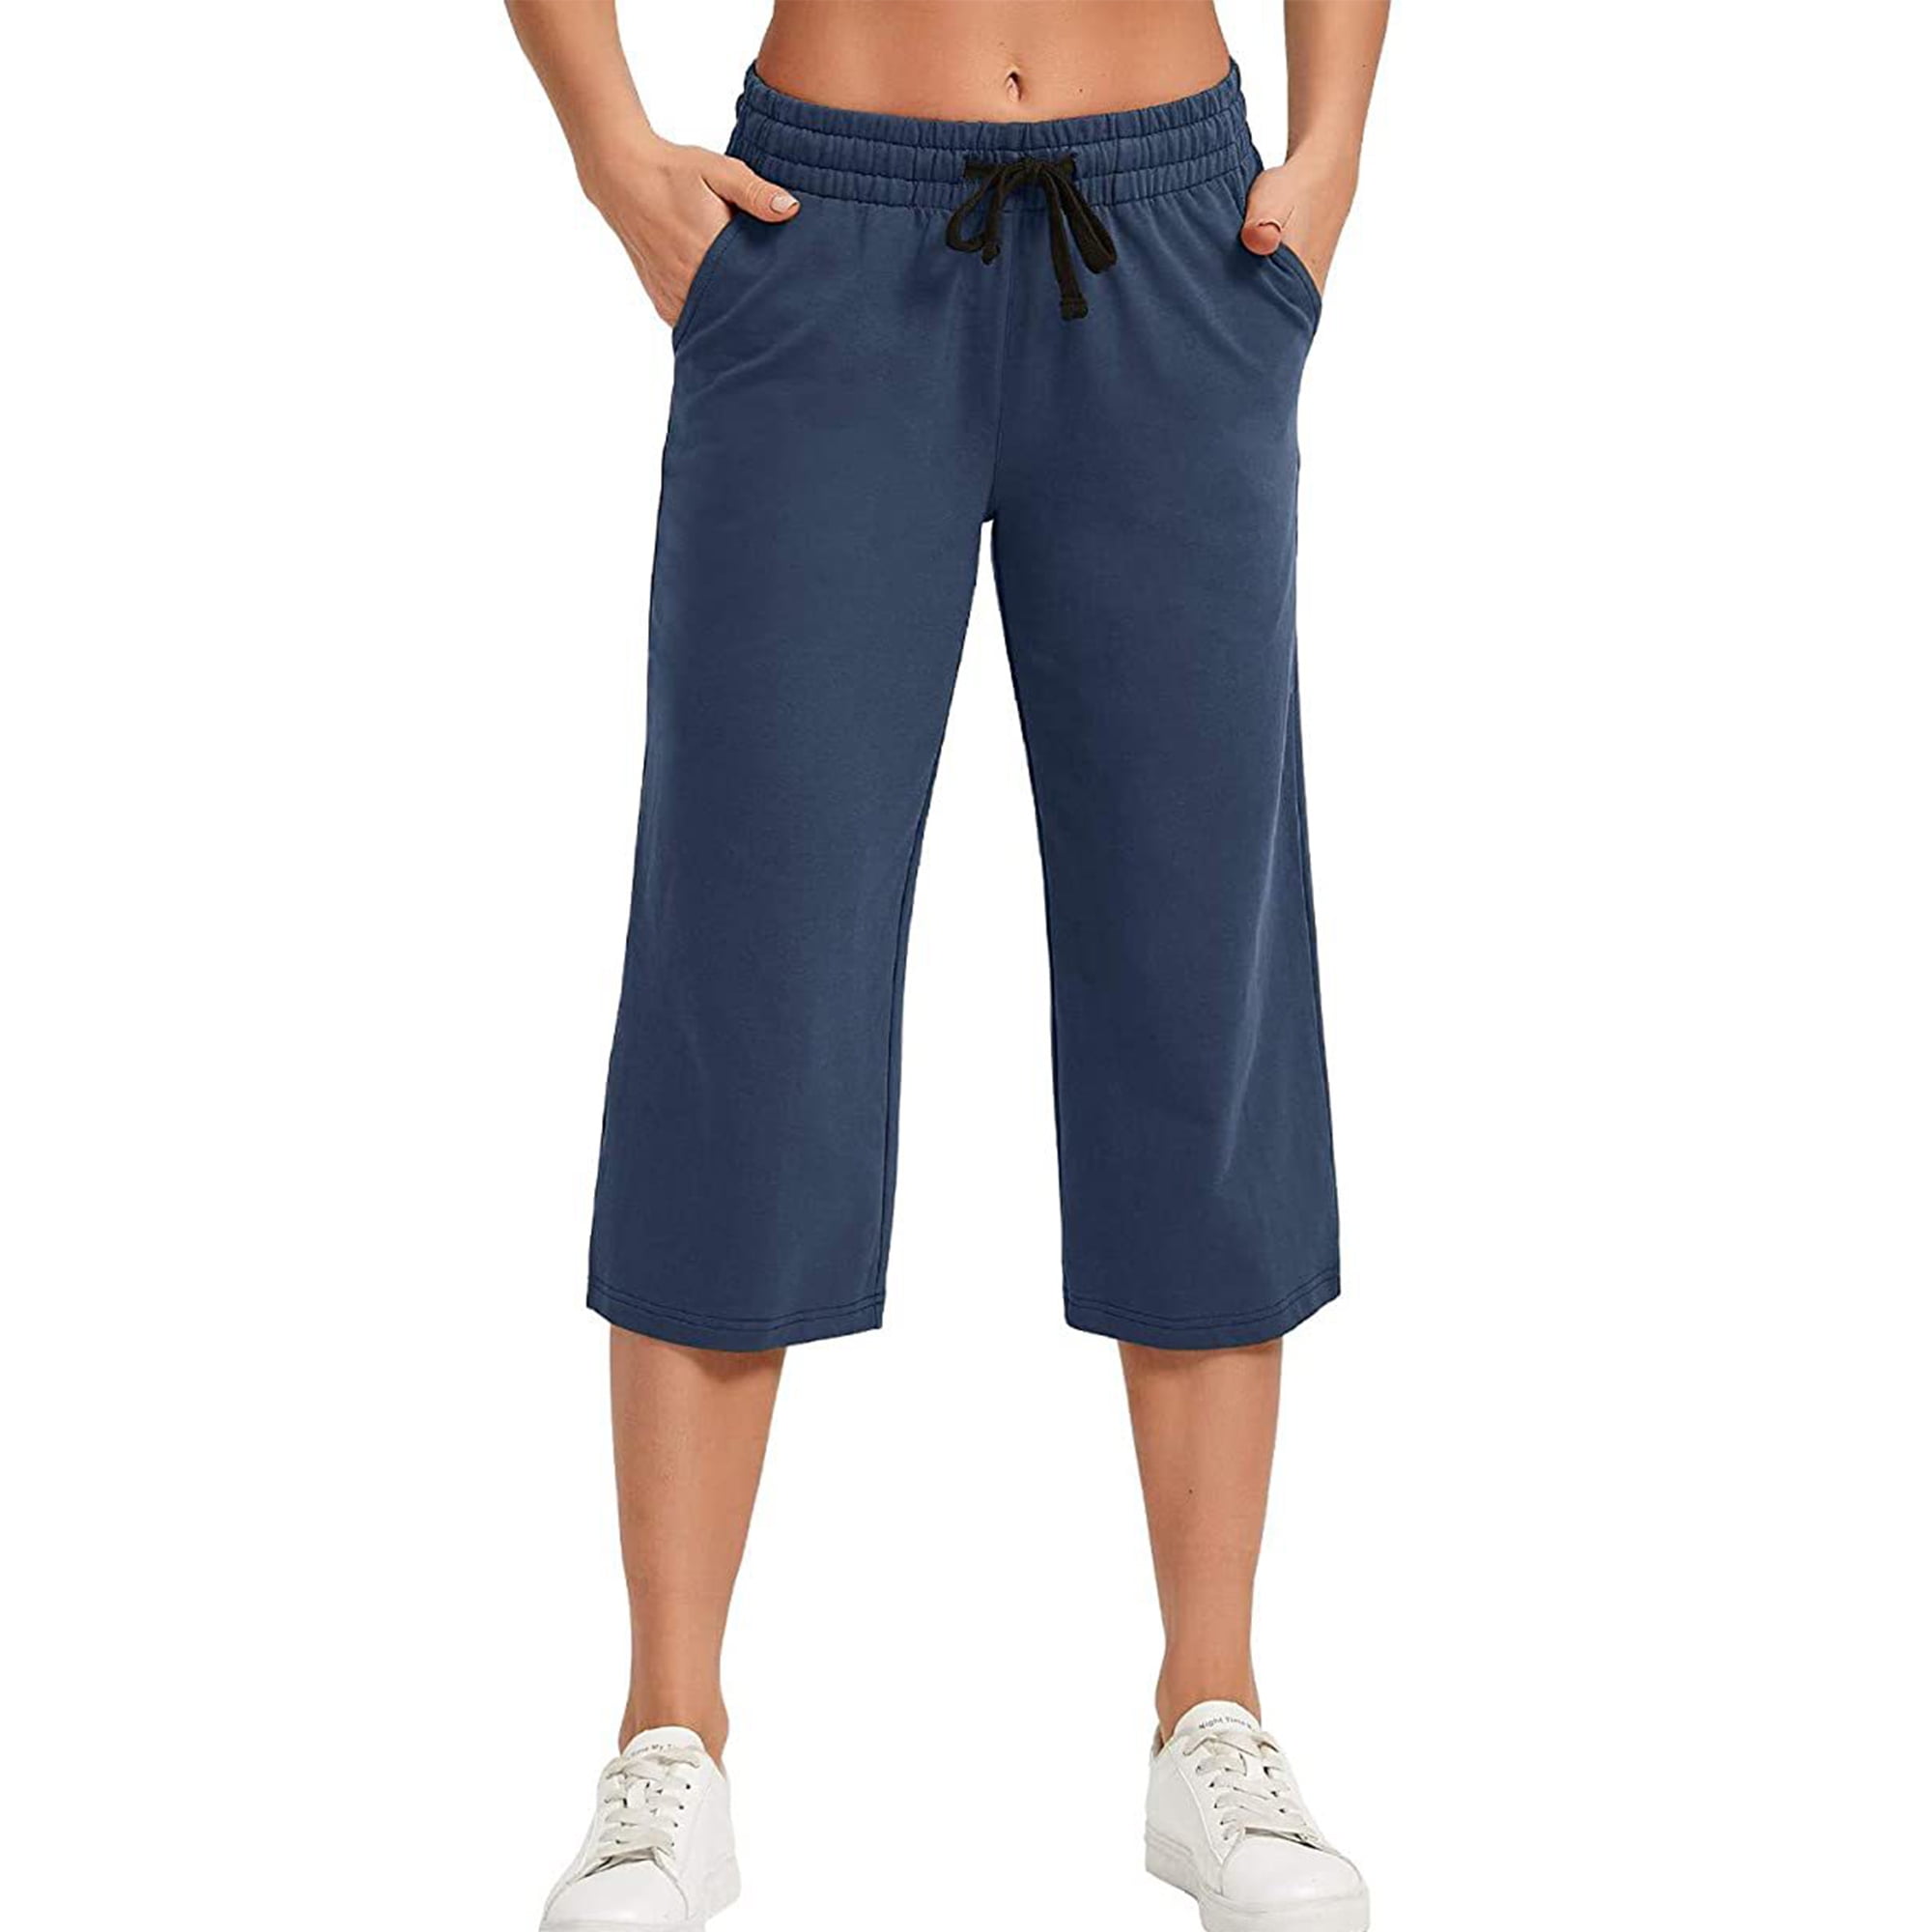 GLESTORE Women Pants Wide Leg Loose Fit Female Yoga Pants Navy Blue L ...